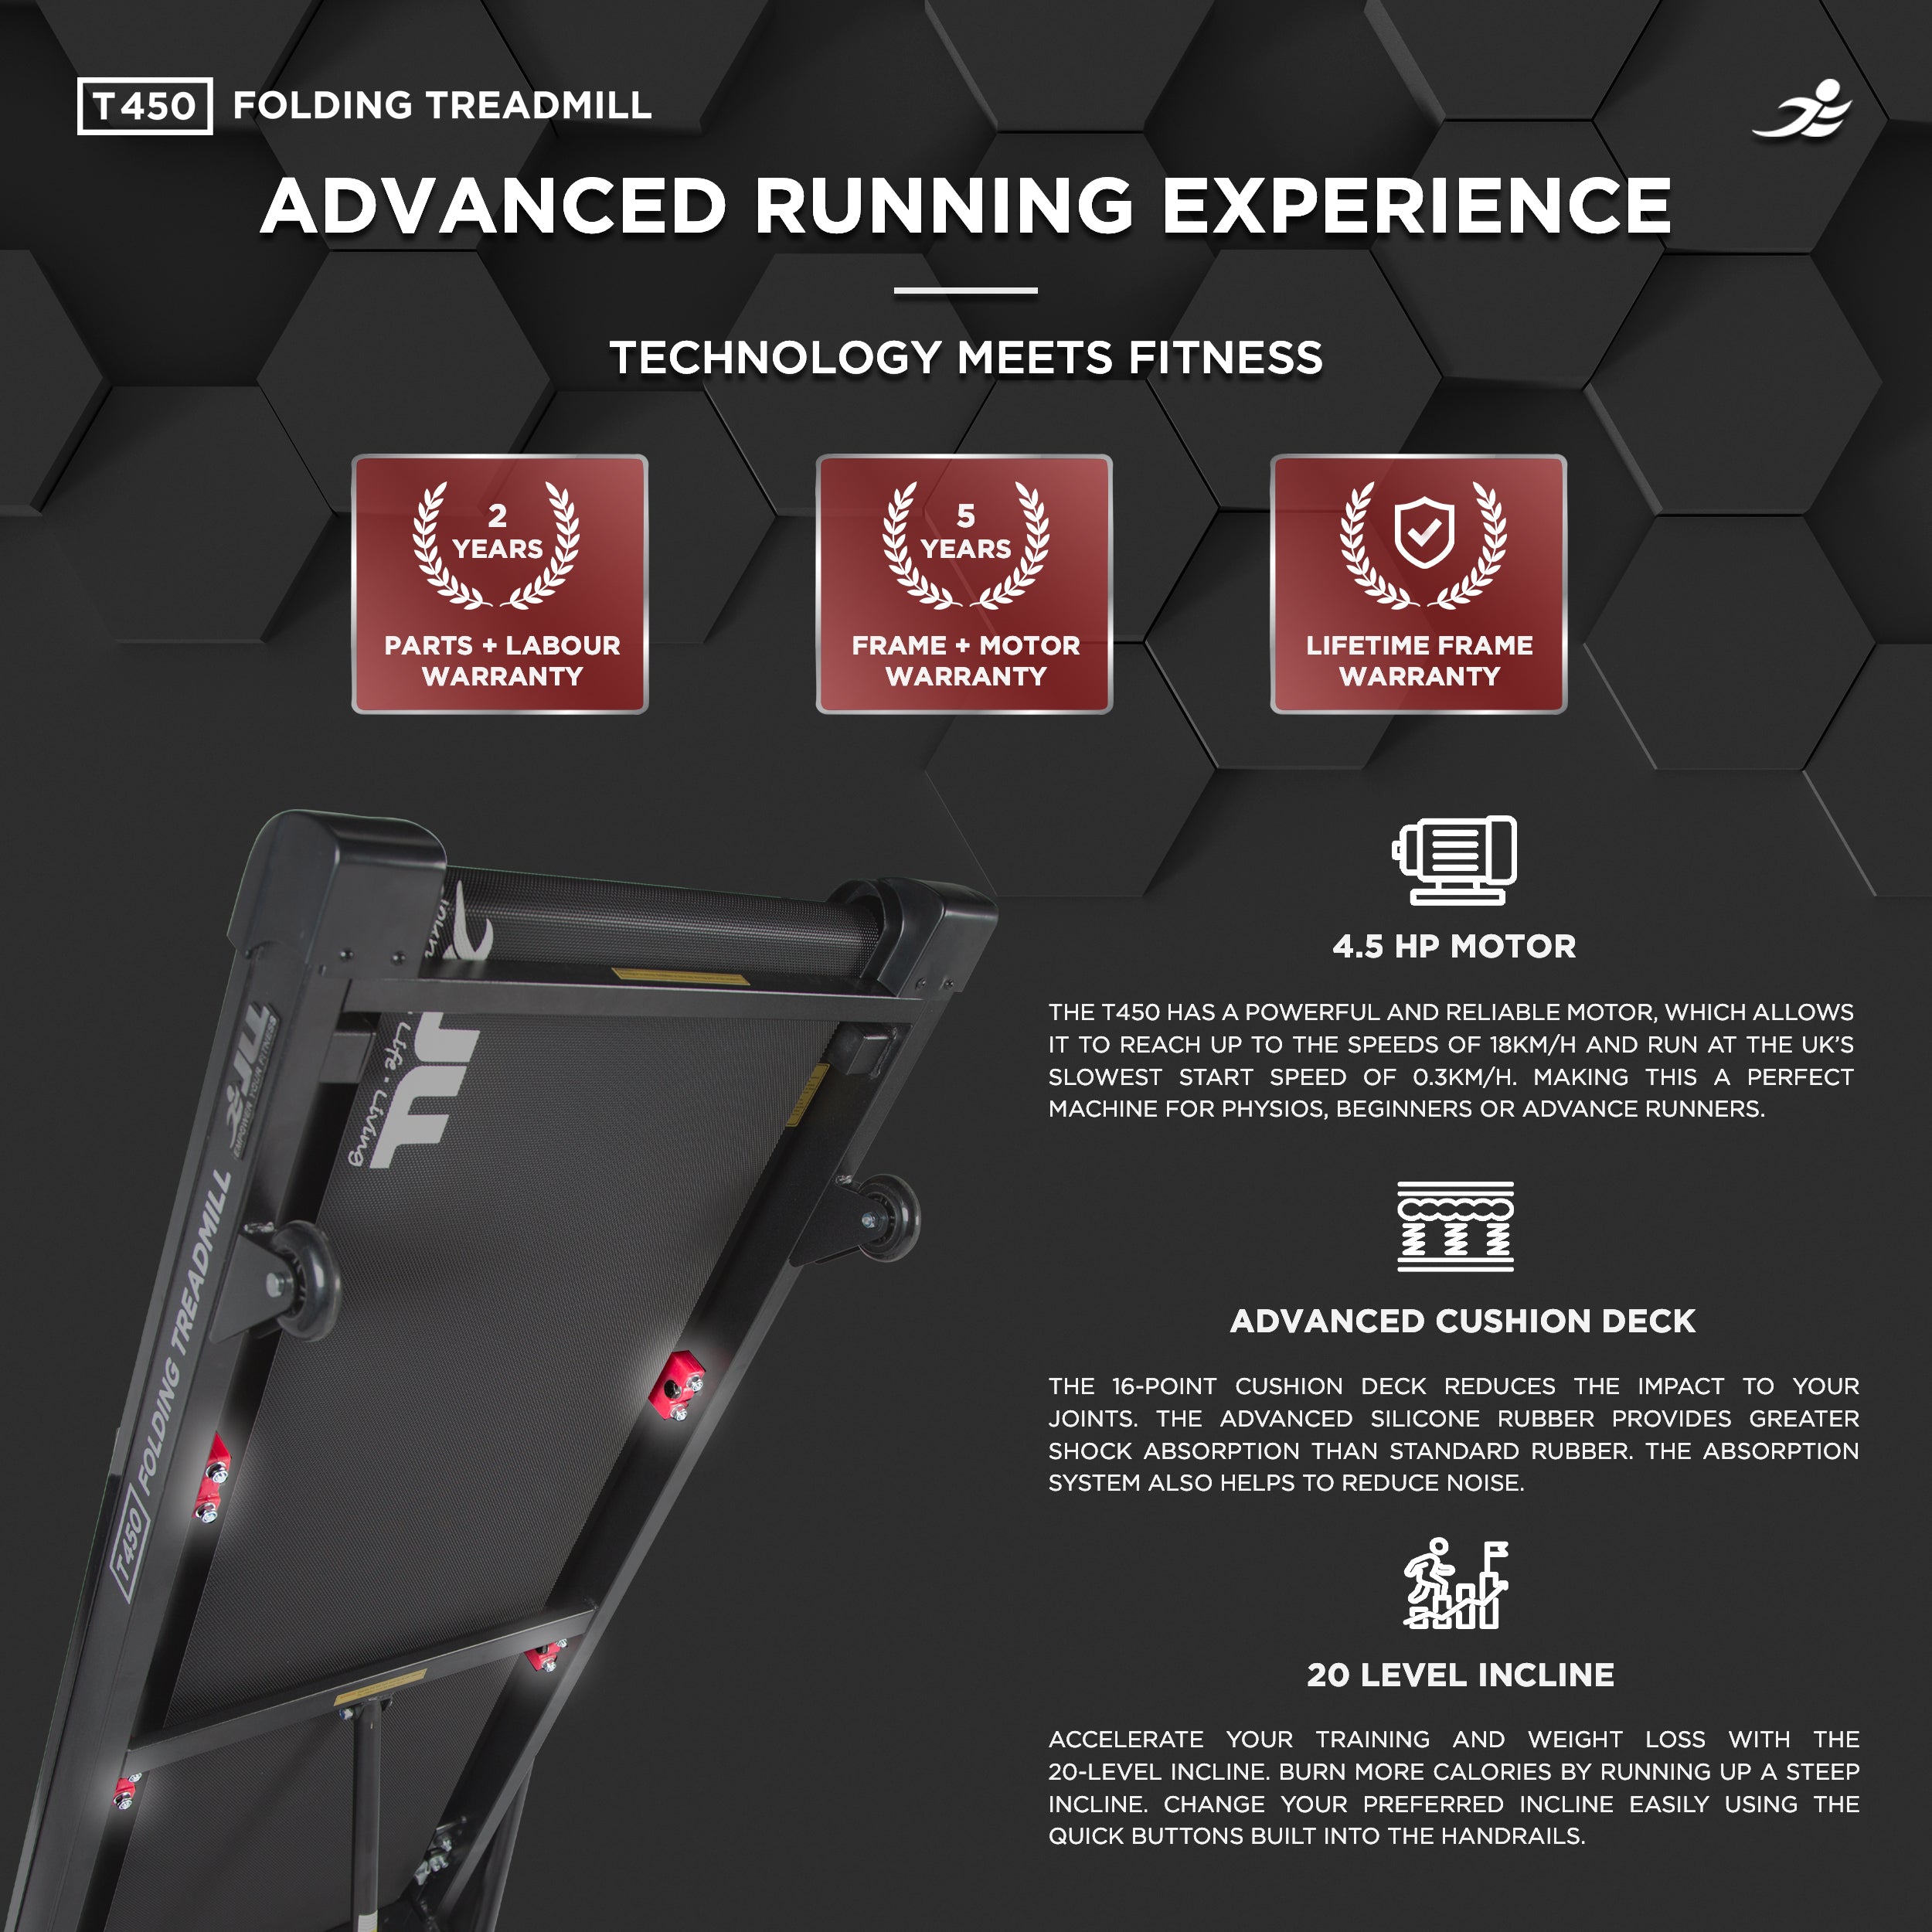 T450 Folding Treadmill - Packaging Damage